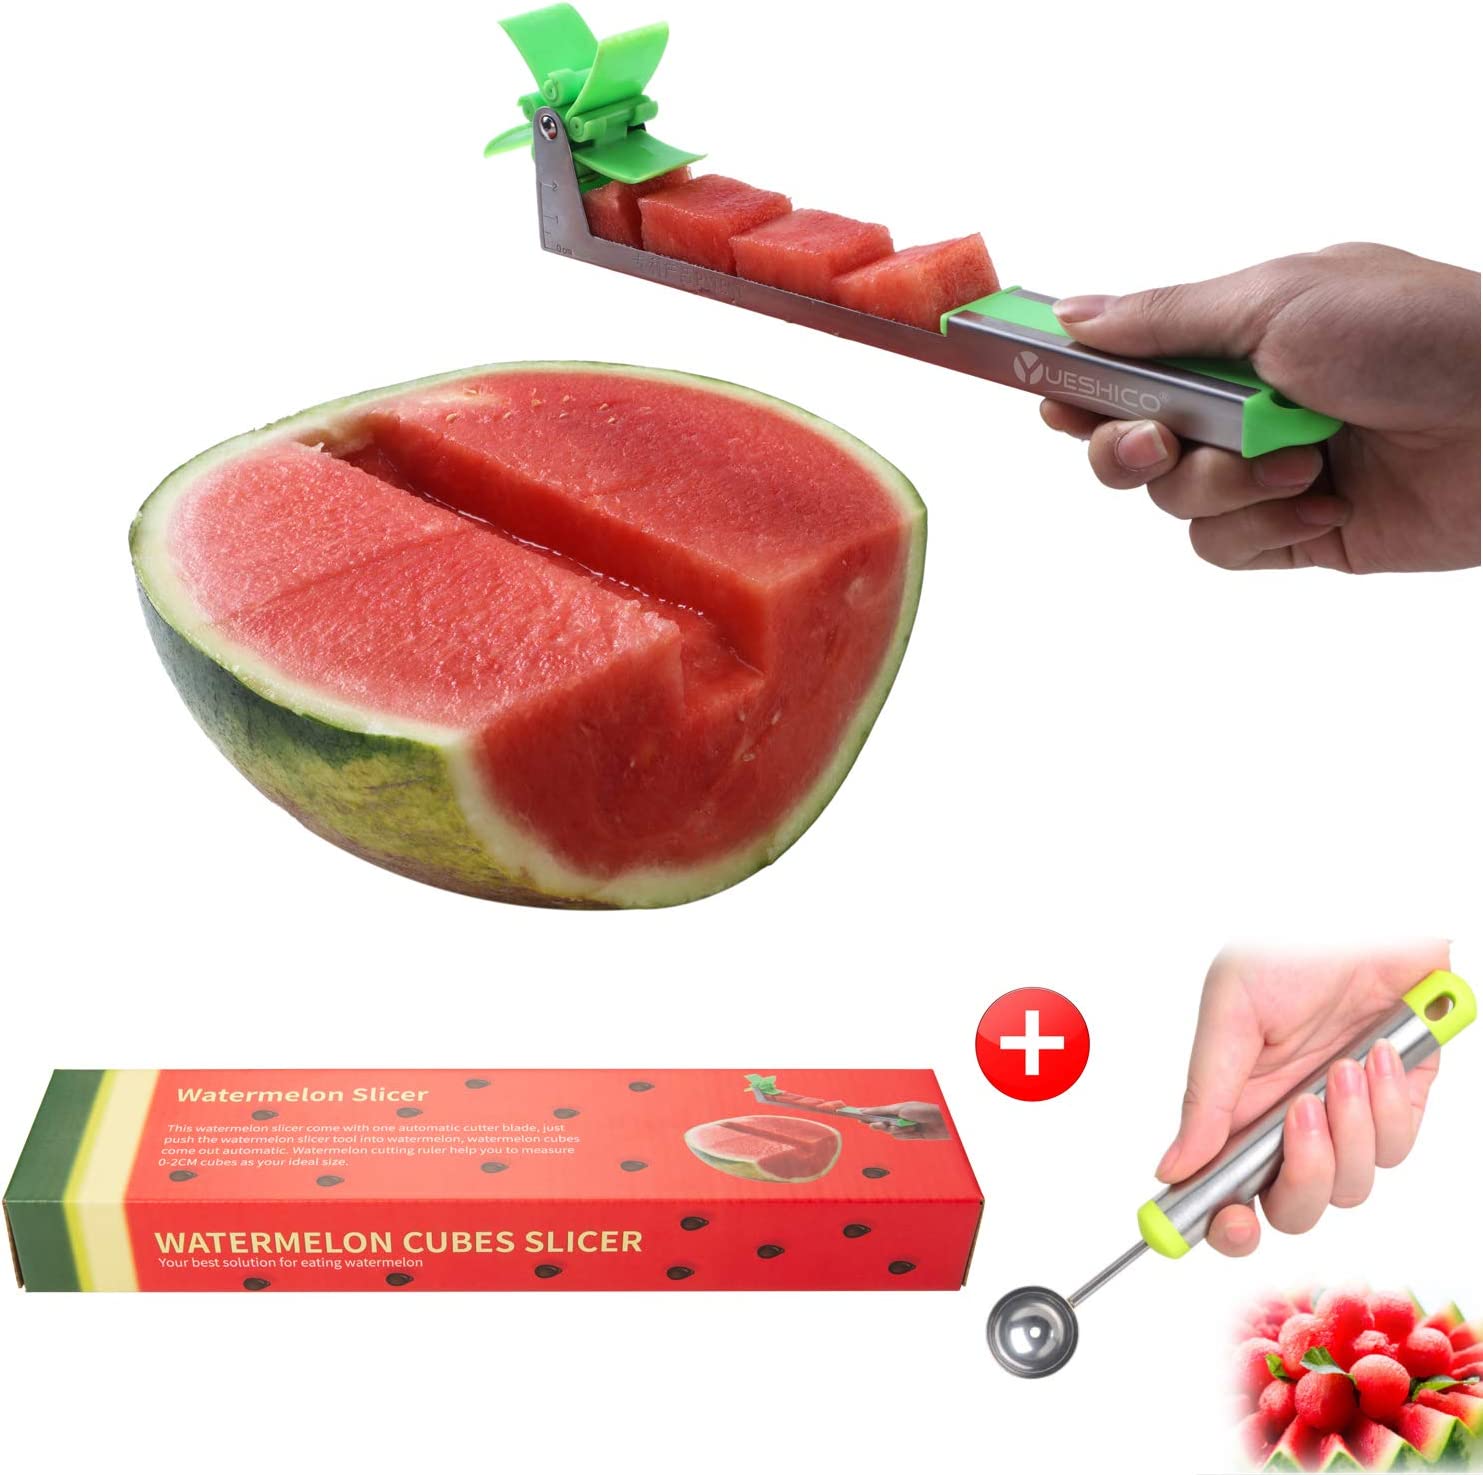 https://thekrazycouponlady.com/wp-content/uploads/2022/07/tiktok-made-me-buy-it-yueshico-watermelon-slicer-2022-1658541822-1658541822.jpg